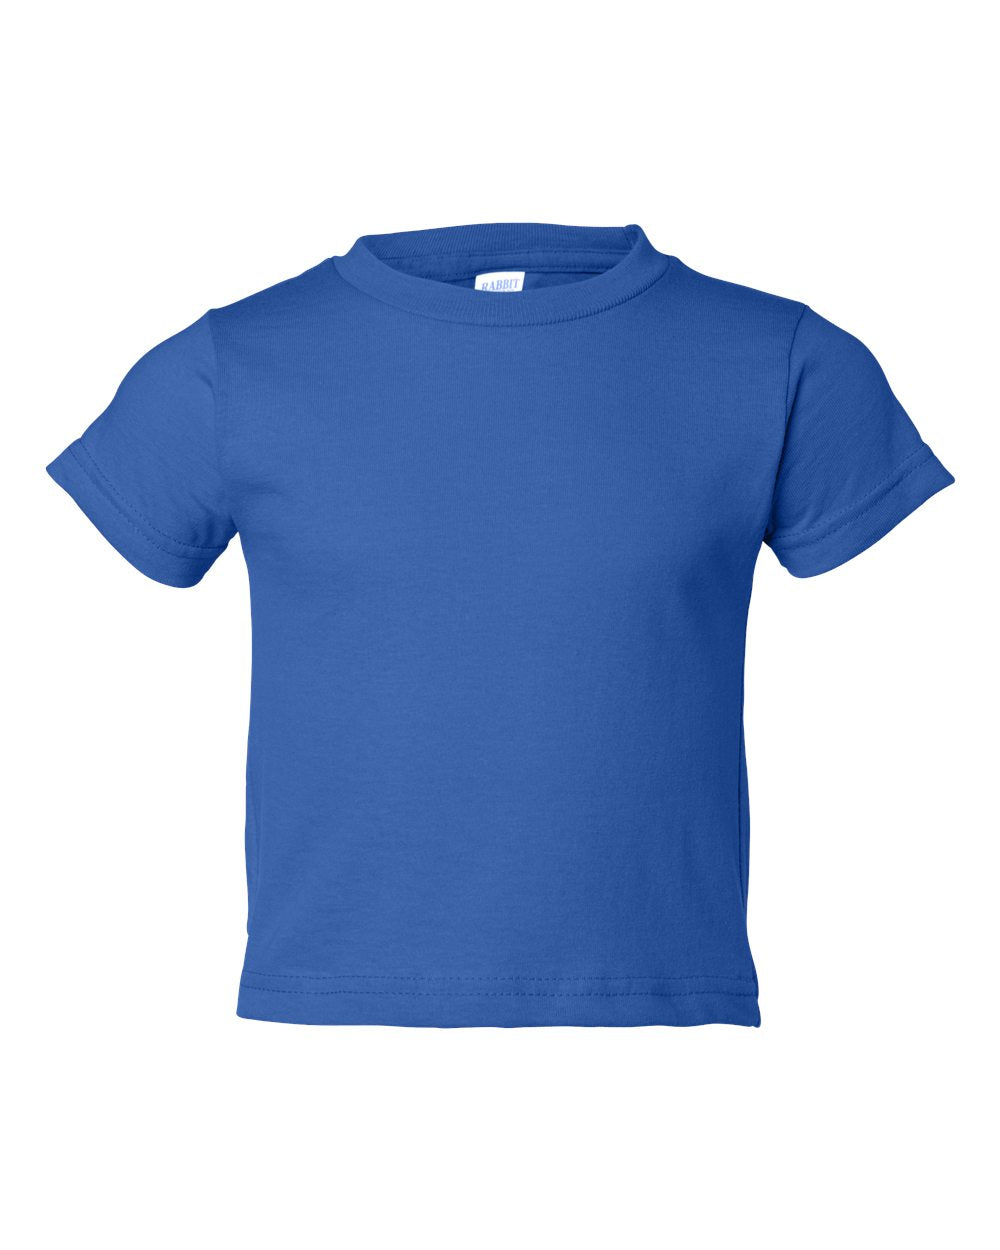 Toddler Jersey T-shirt, 100% Cotton, Royal